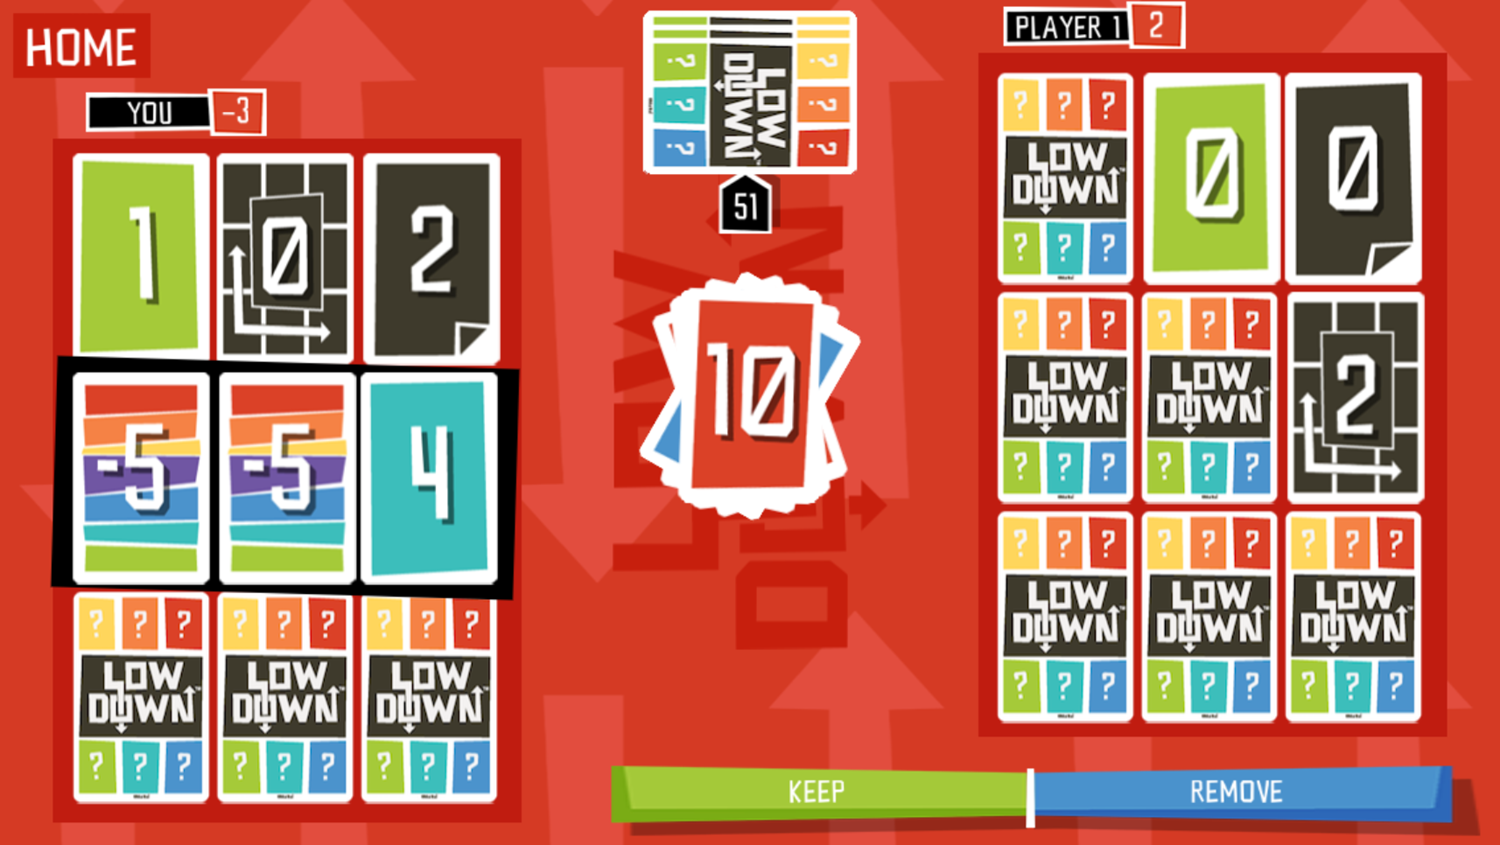 Low Down Game Play Screenshot.